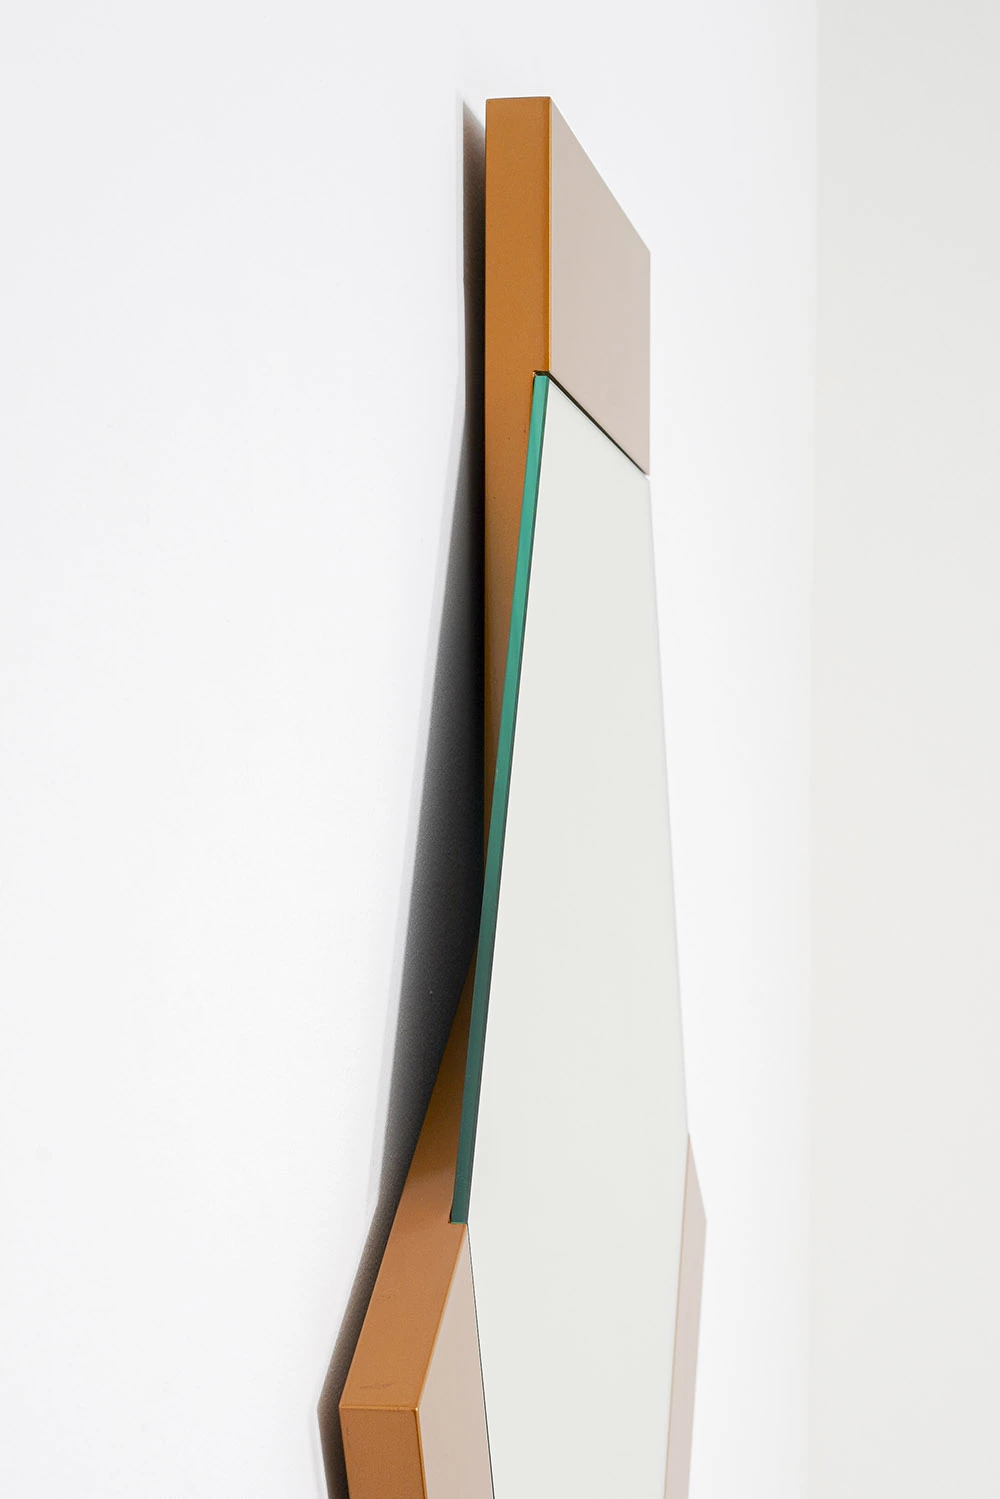 Mini Satellite 3 Mirror - Pierre Charpin - Mirror - Galerie kreo